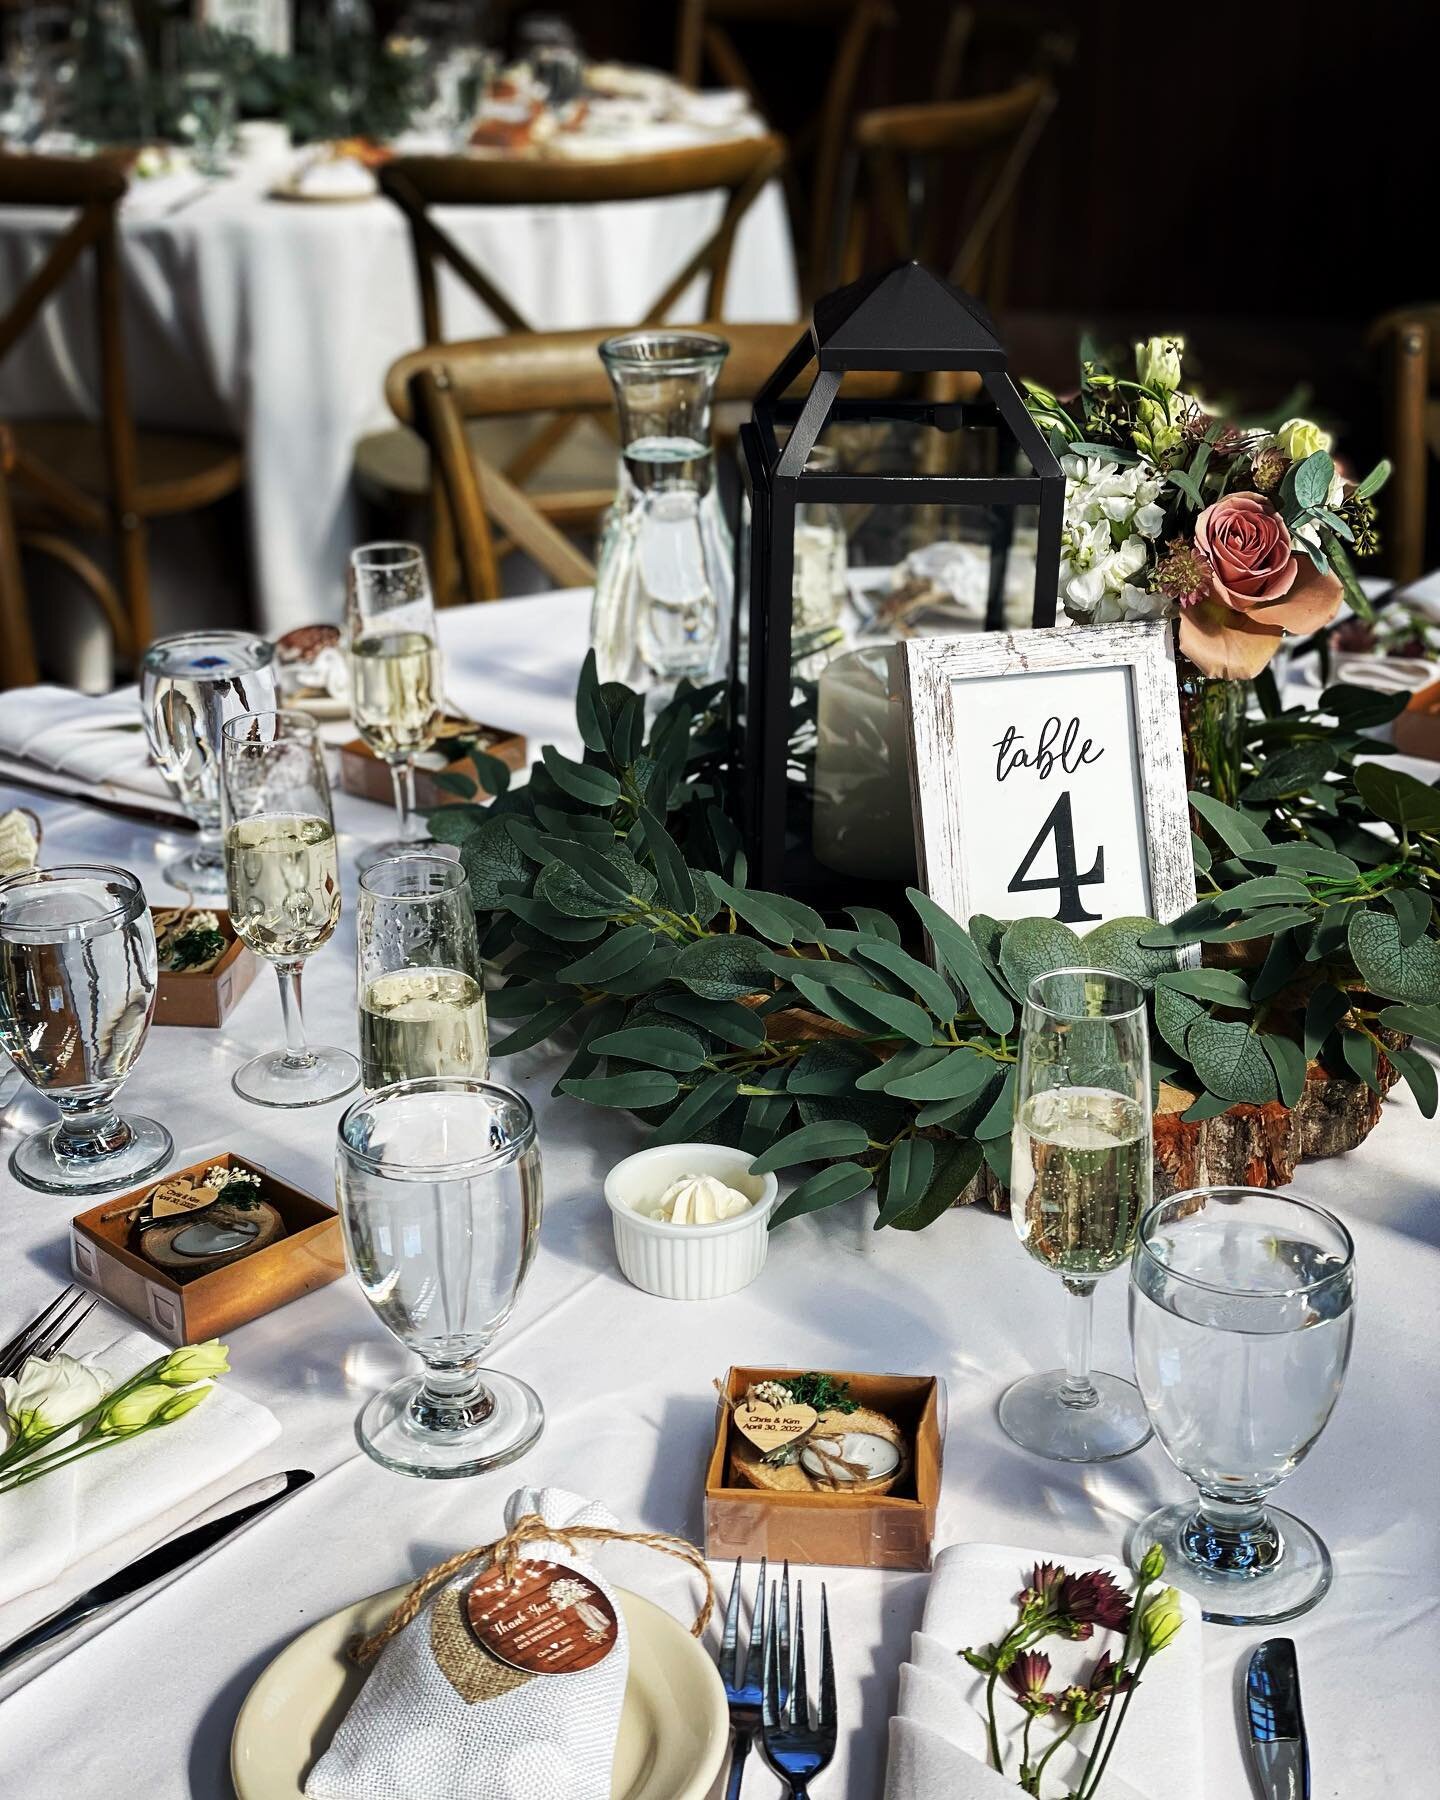 🥂

#finedining 
#cocktails 
#happyhour 
#celebrate 
#celebrate🎉 
#telfordpa 
#parestaurants 
#restaurant 
#partytime 
#weddingvenue 
#wedding 
#weddinginspiration 
#specialevents
#events